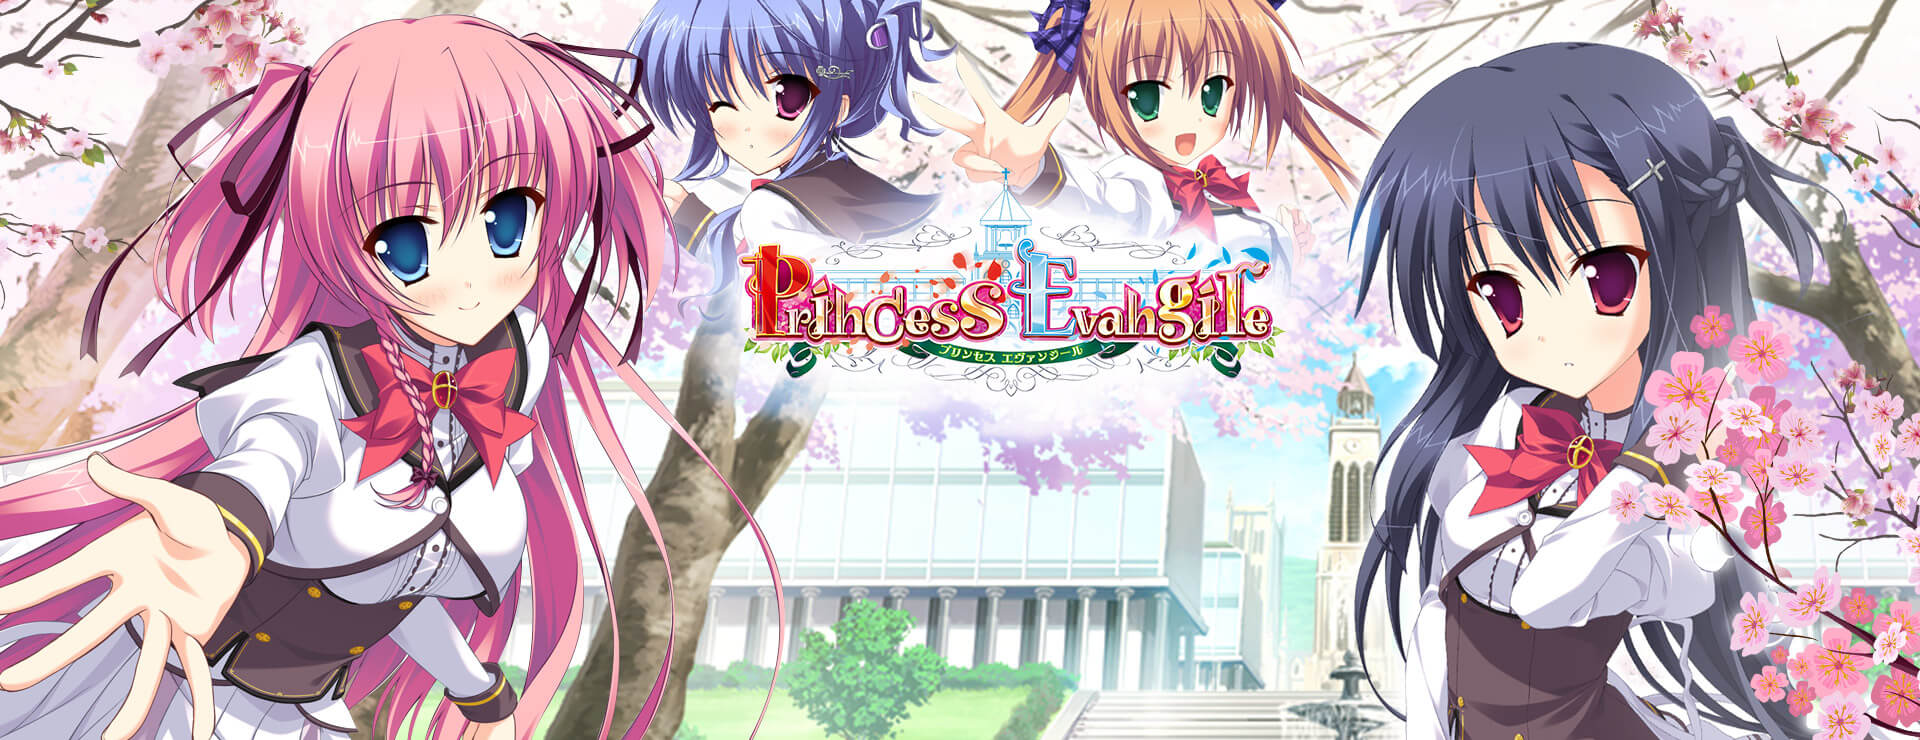 Princess Evangile - Visual Novel Game